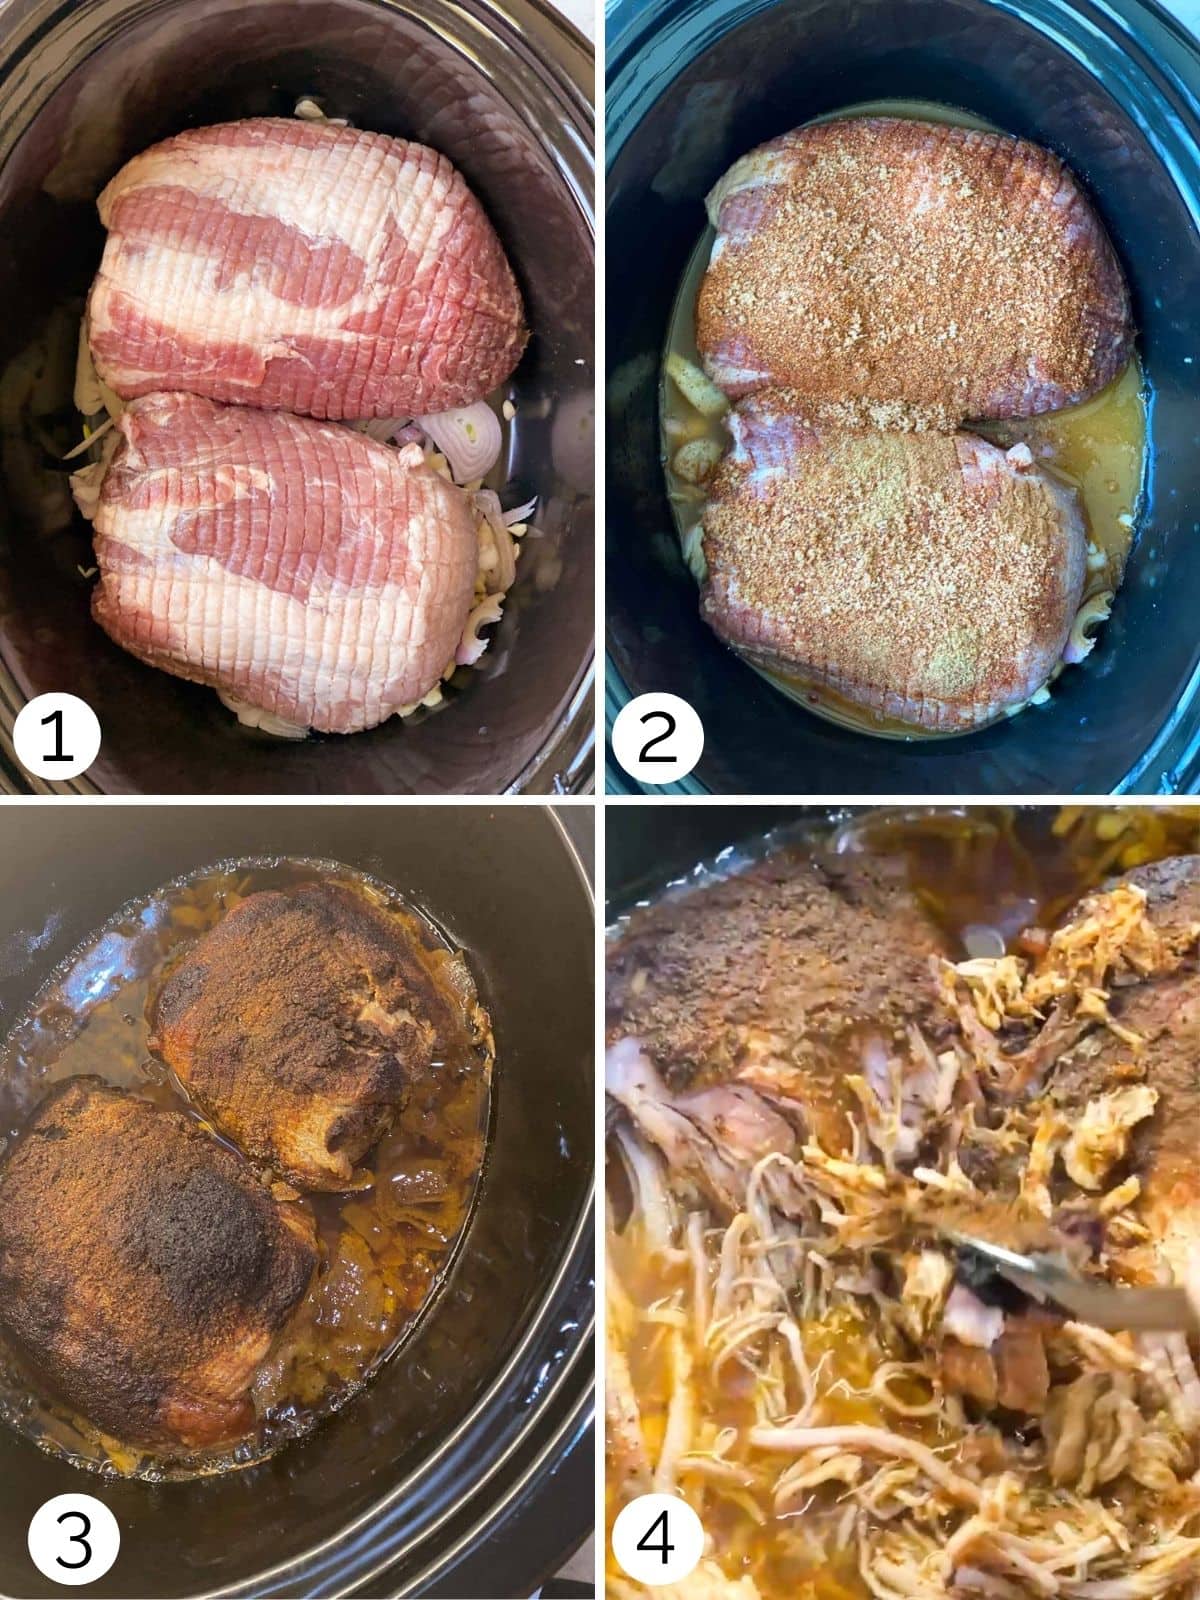 Step by step process of slow cooking pork shoulder.